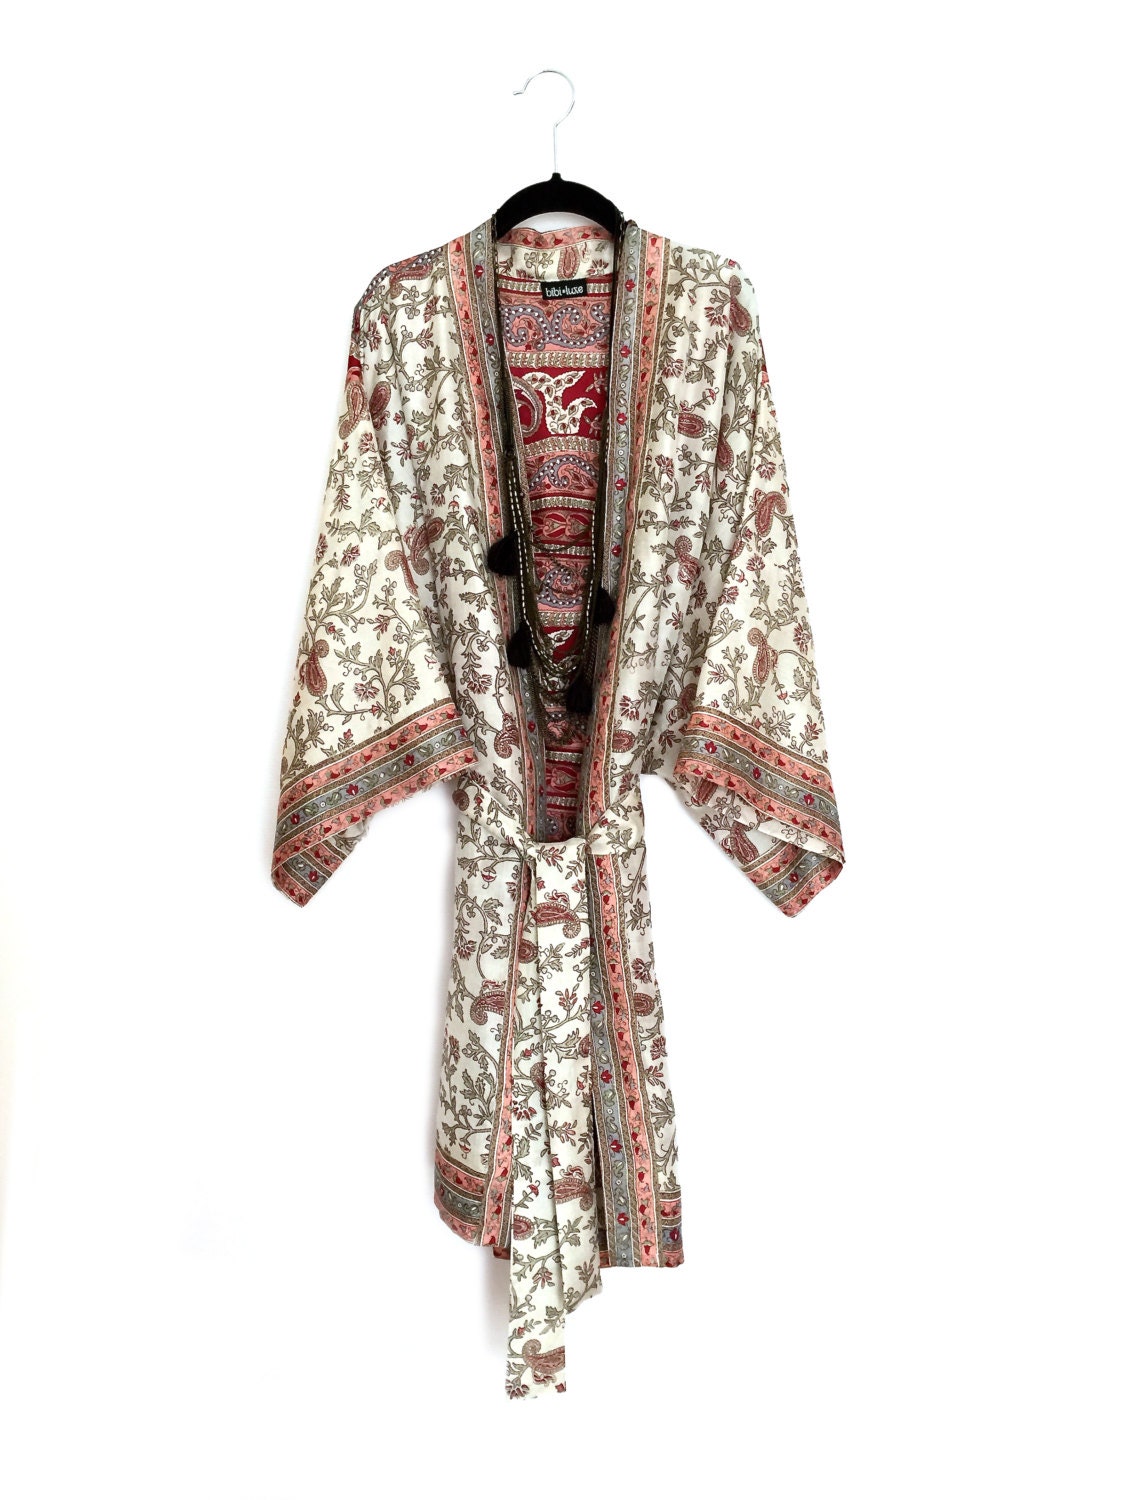 Silk long Kimono jacket / beach cover up Indian border by Bibiluxe